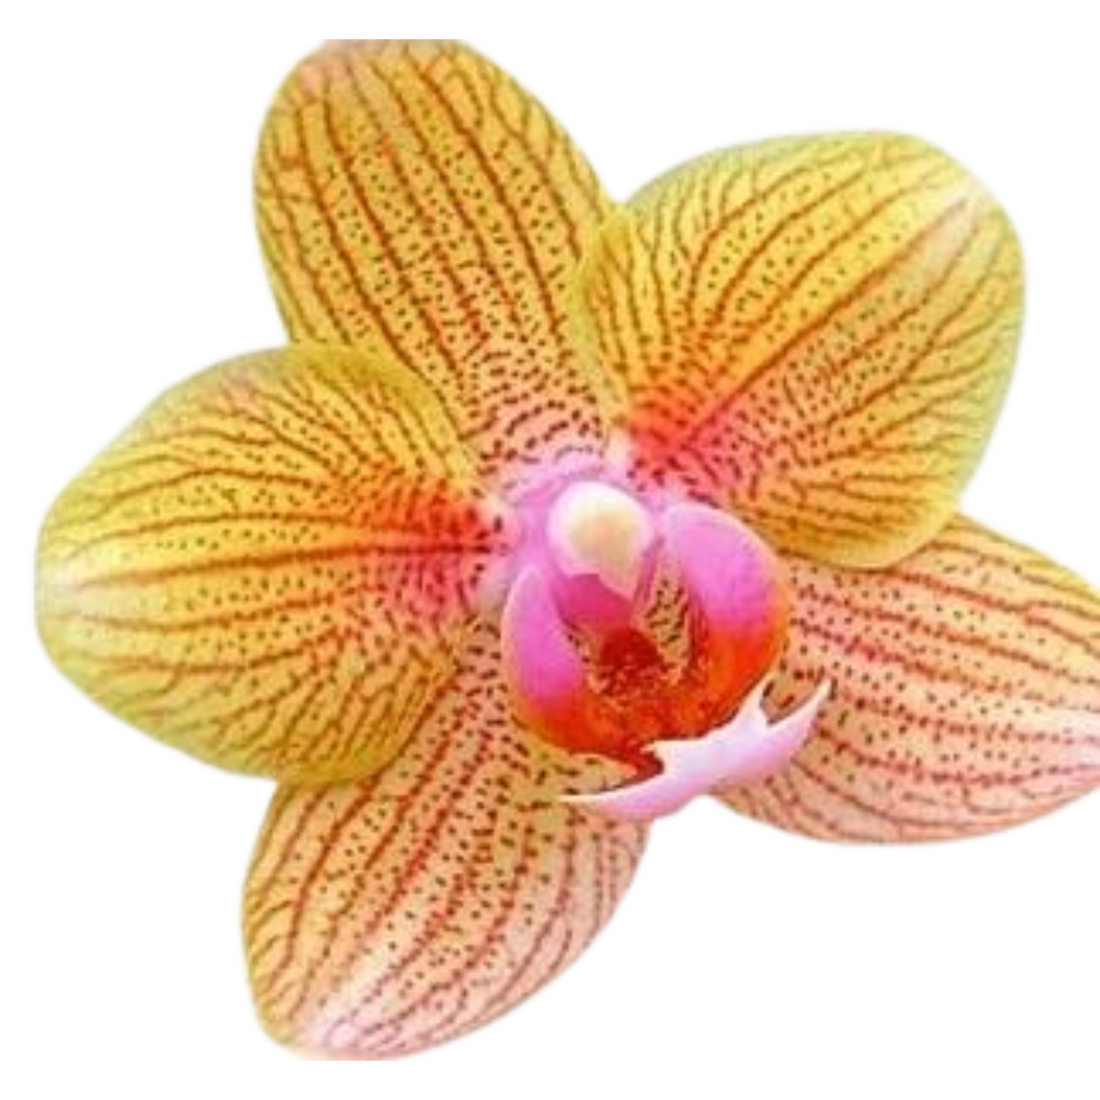 Phalaenopsis Passion Fruit - Blooming Size